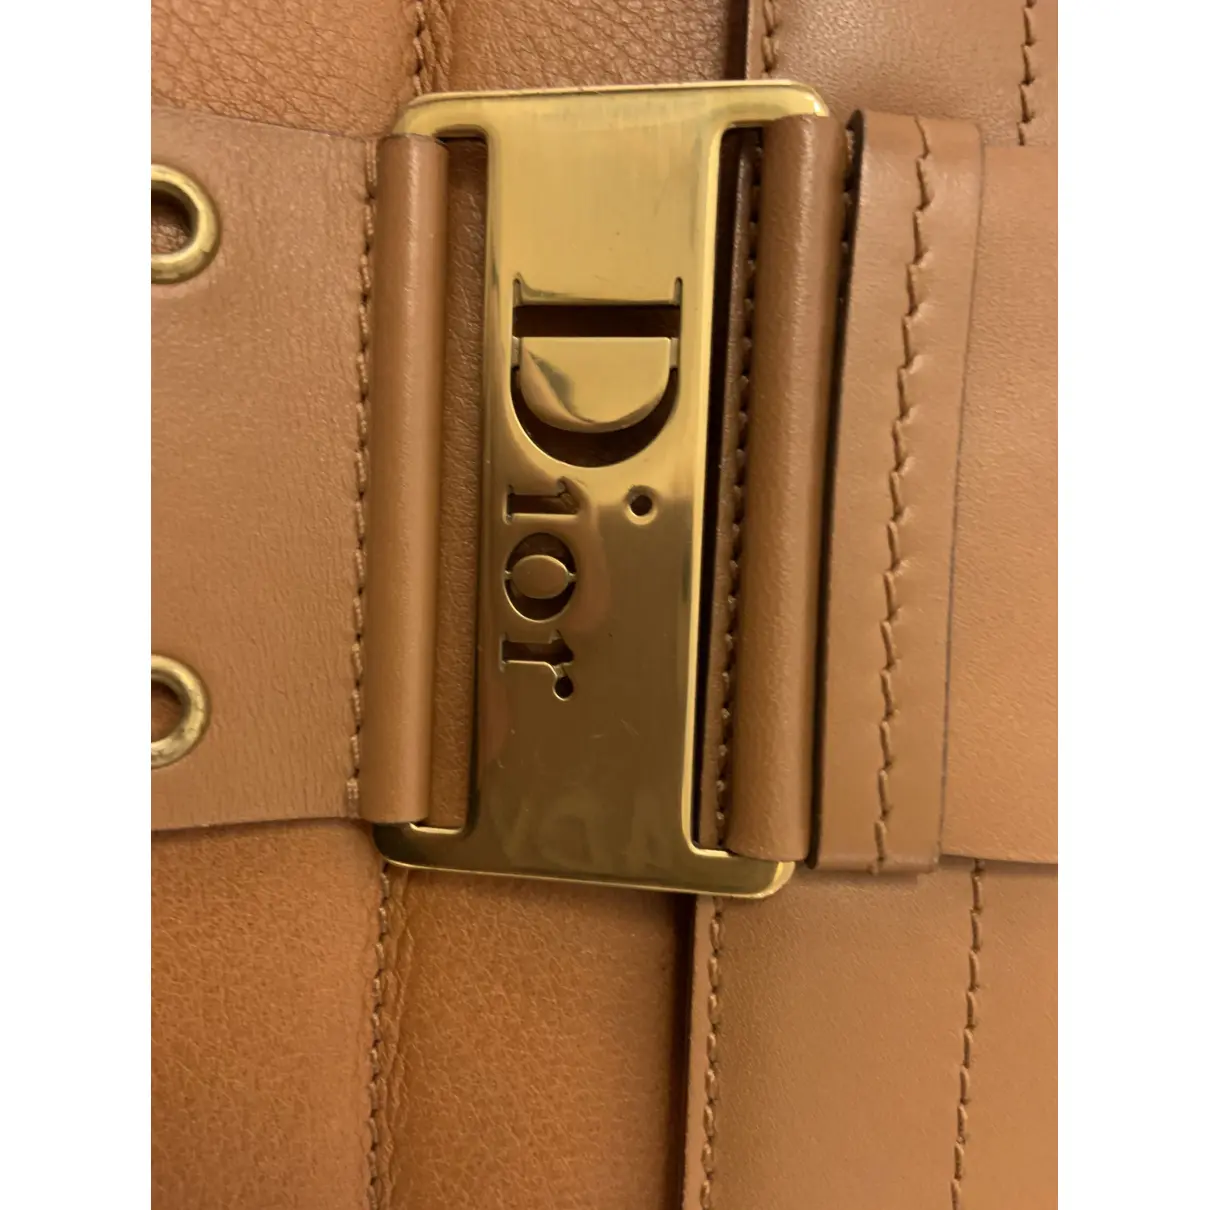 Columbus leather handbag Dior - Vintage